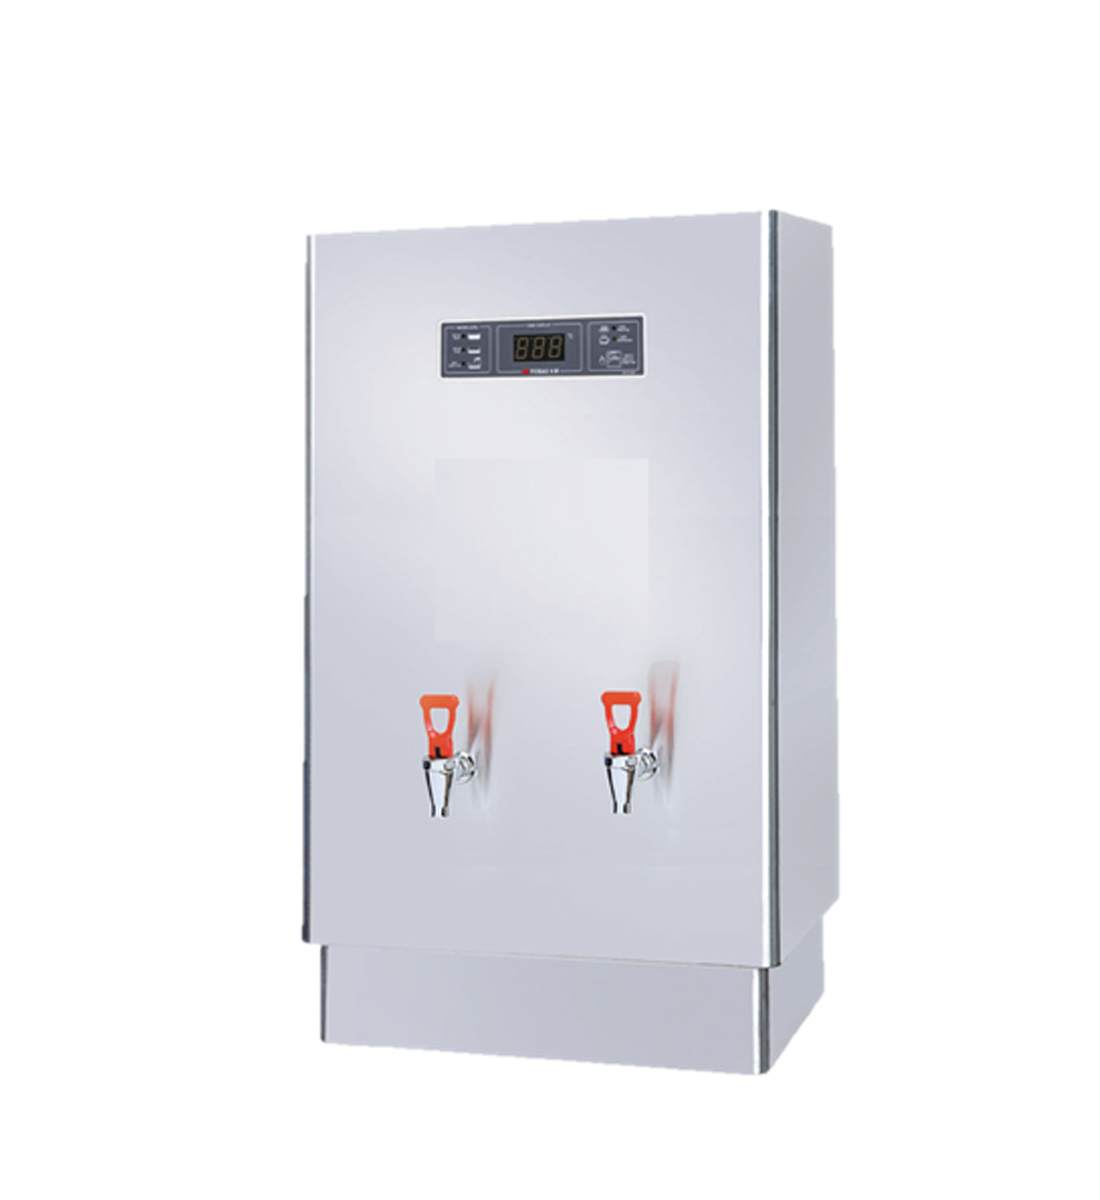 Innova hot water dispenser